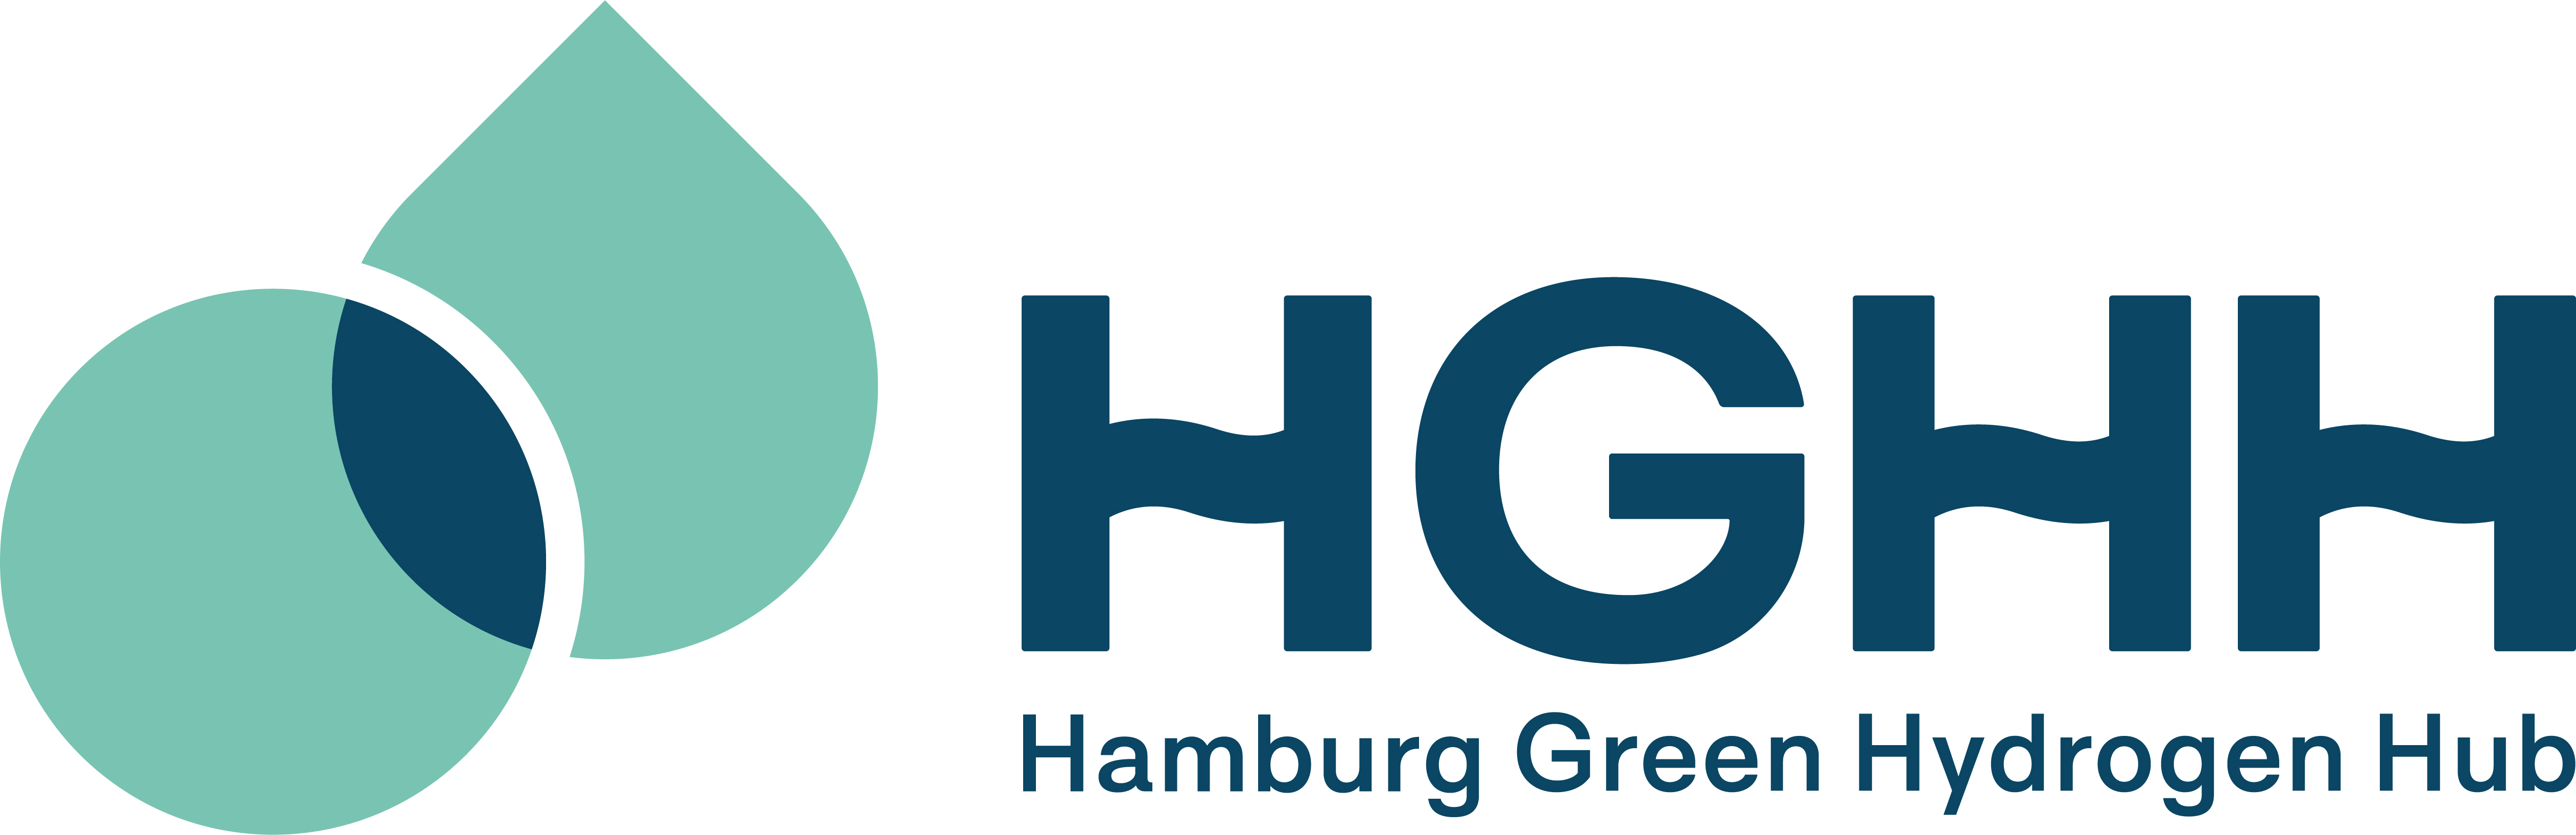 Hamburg Green Hydrogen Hub (HGHH)